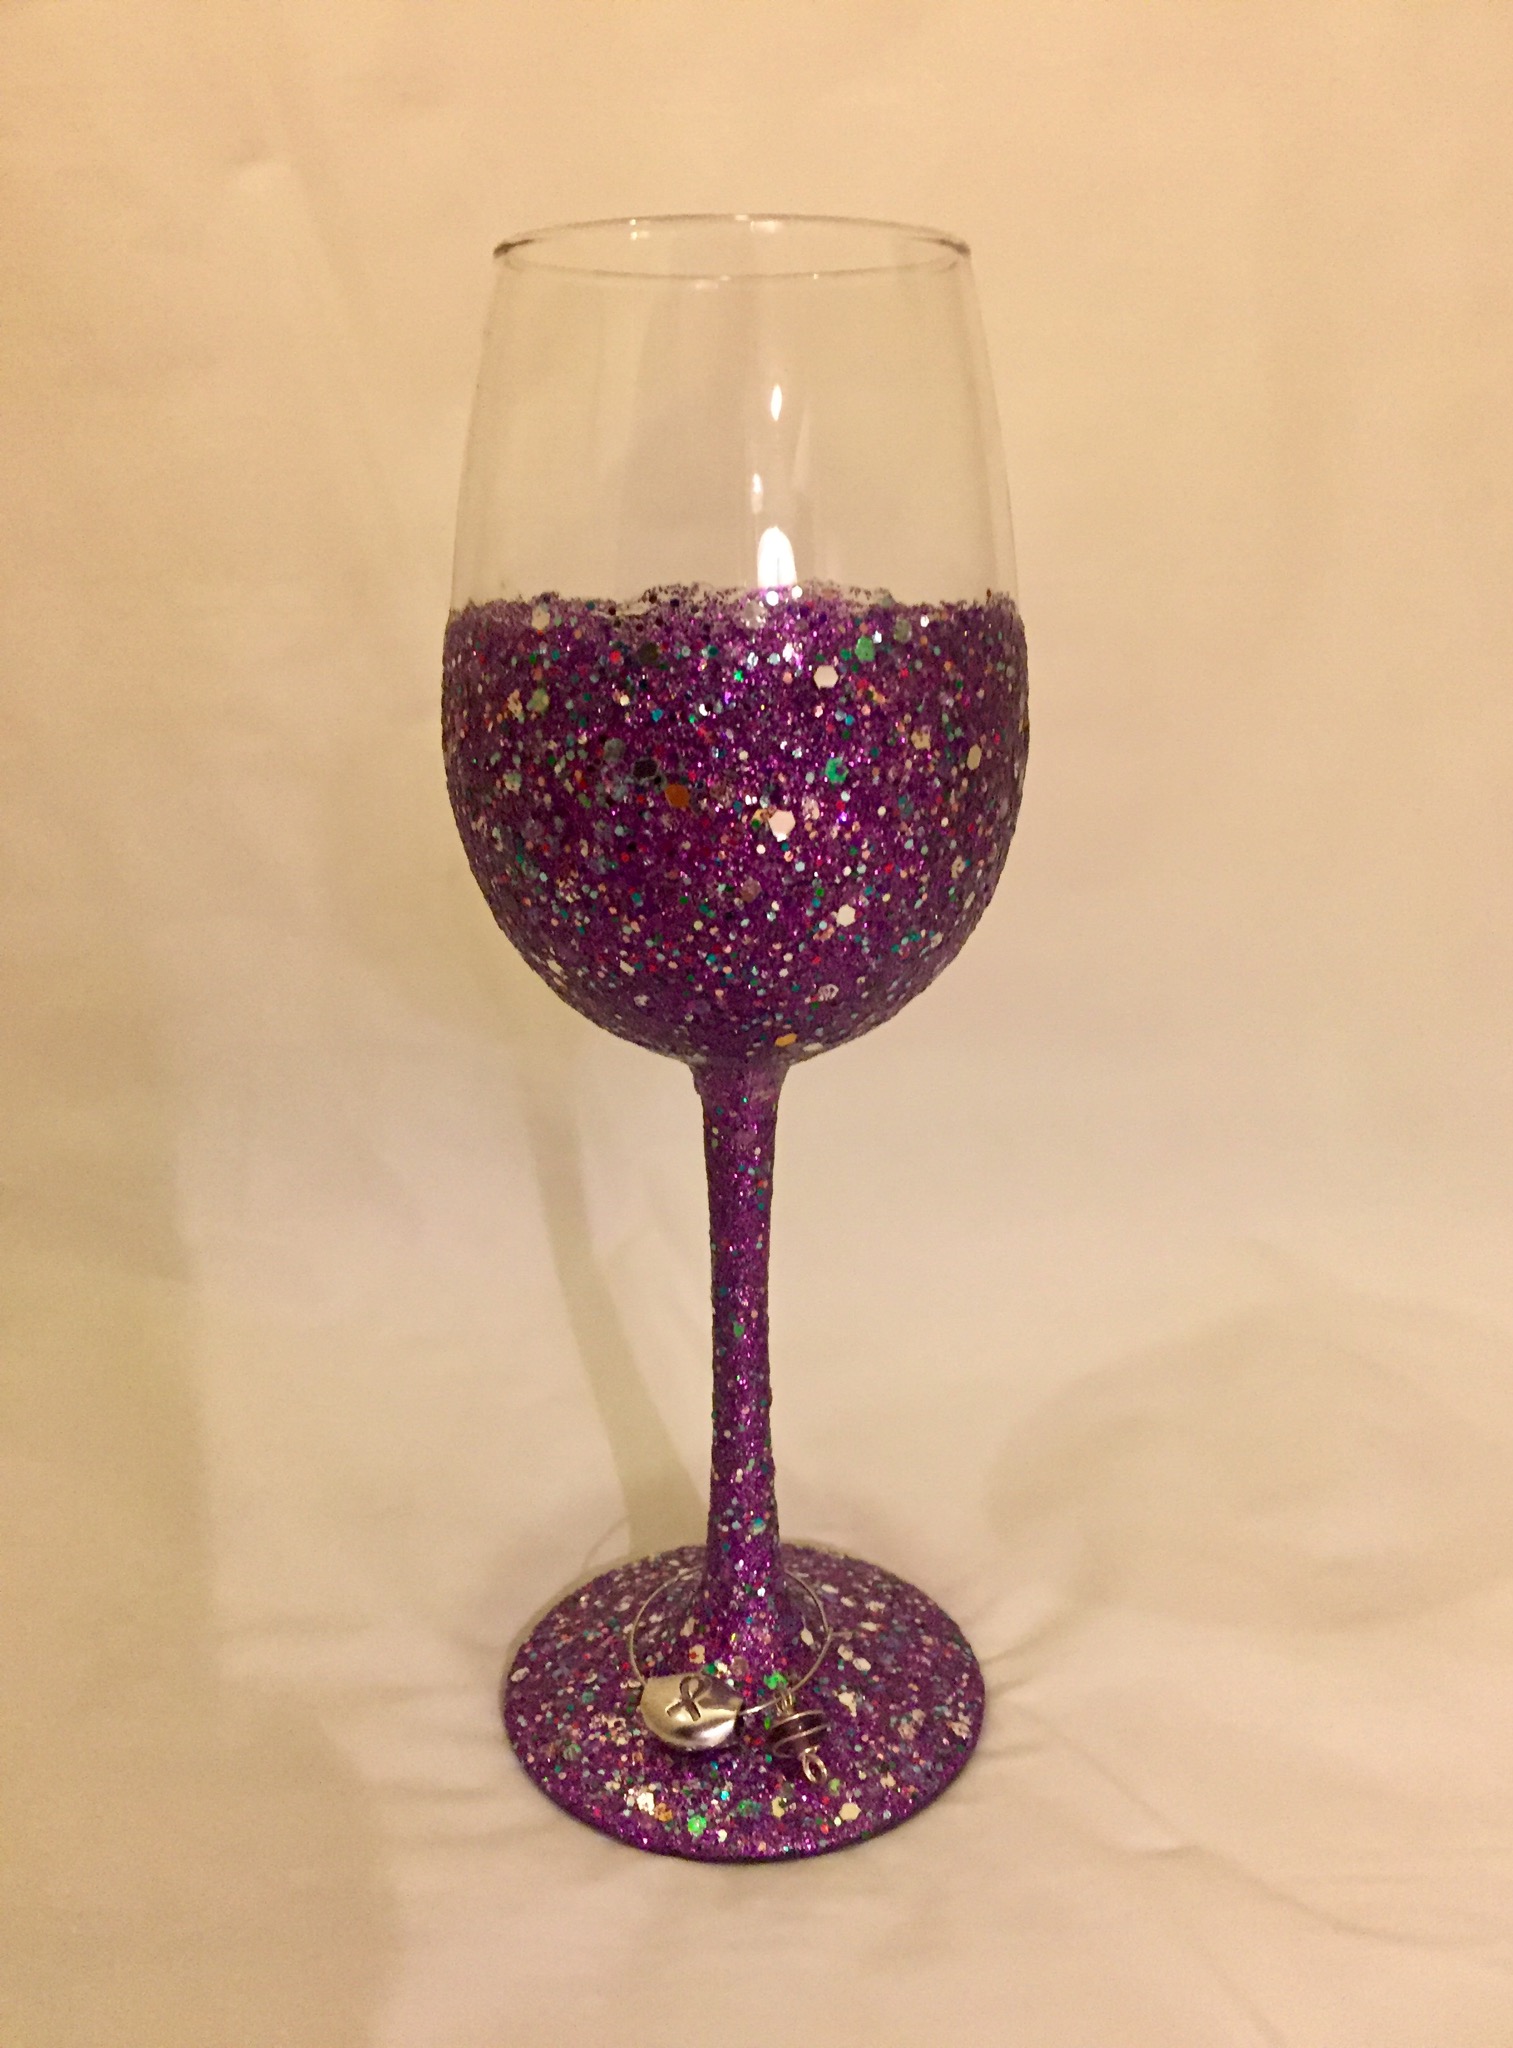 https://sparklenetwork.org/wp-content/uploads/2018/11/purple-wine-glass.jpg